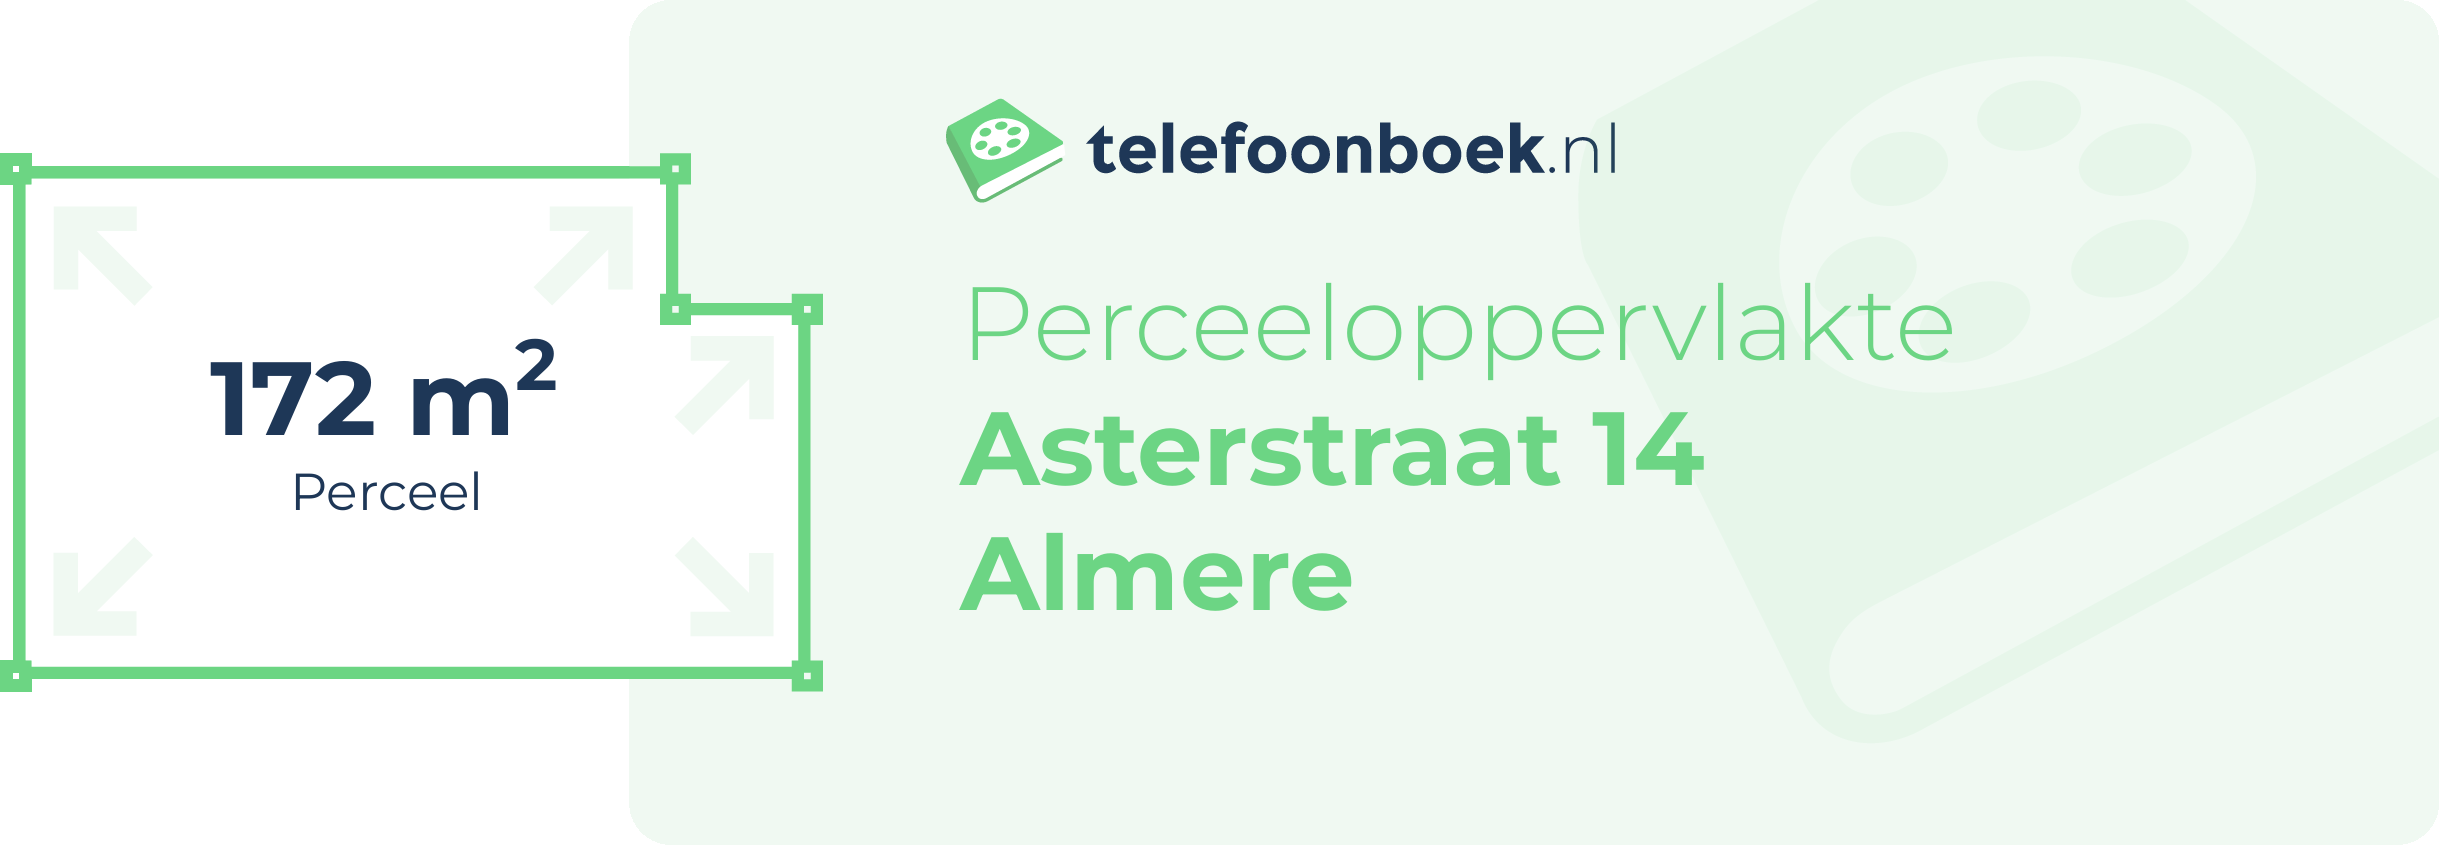 Perceeloppervlakte Asterstraat 14 Almere